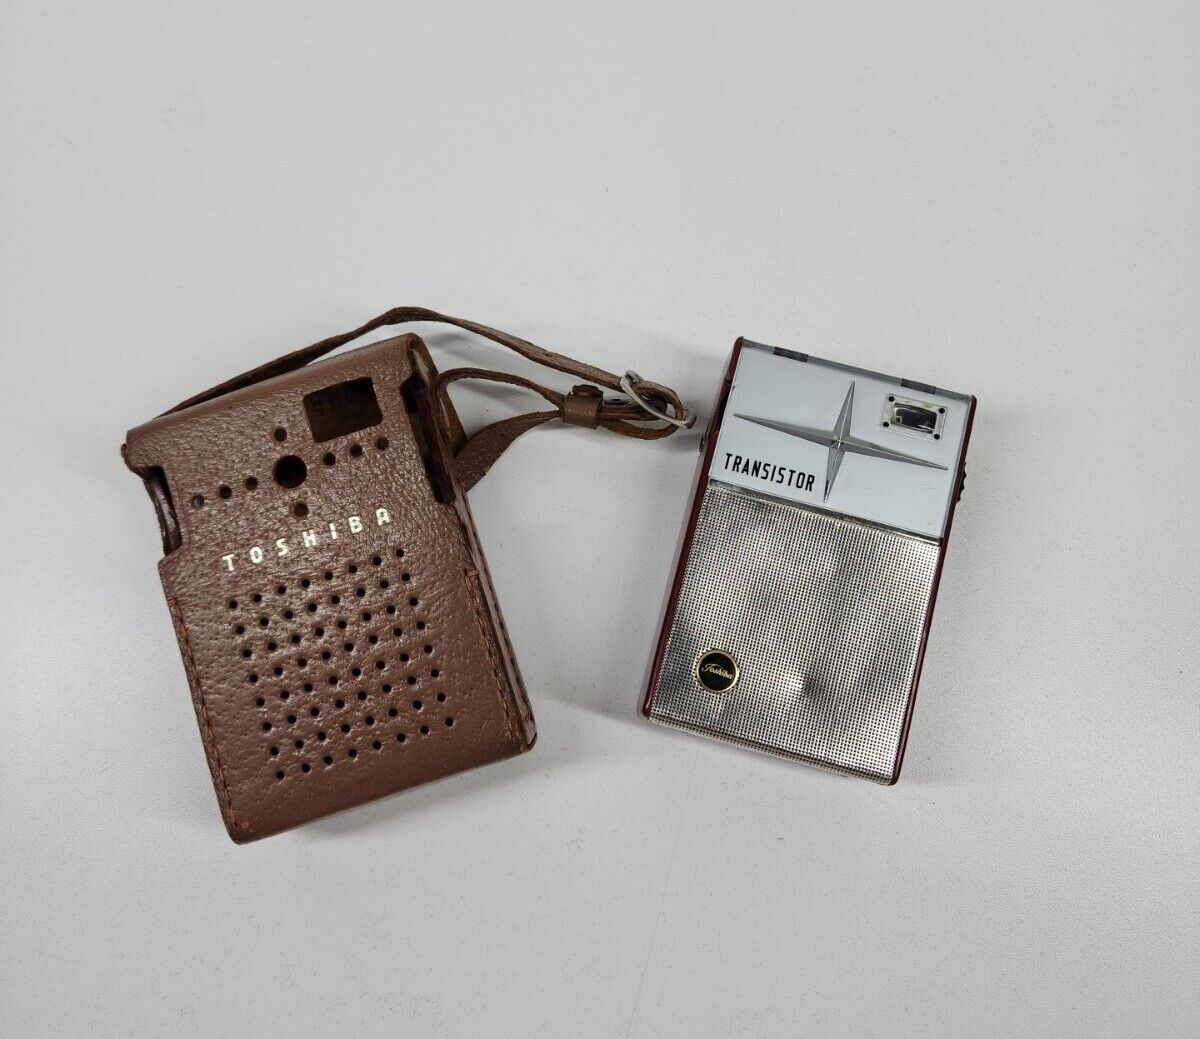 Toshiba 5TP-90 - 5 Transistor Shirt Pocket Radio - 1959 - Brown